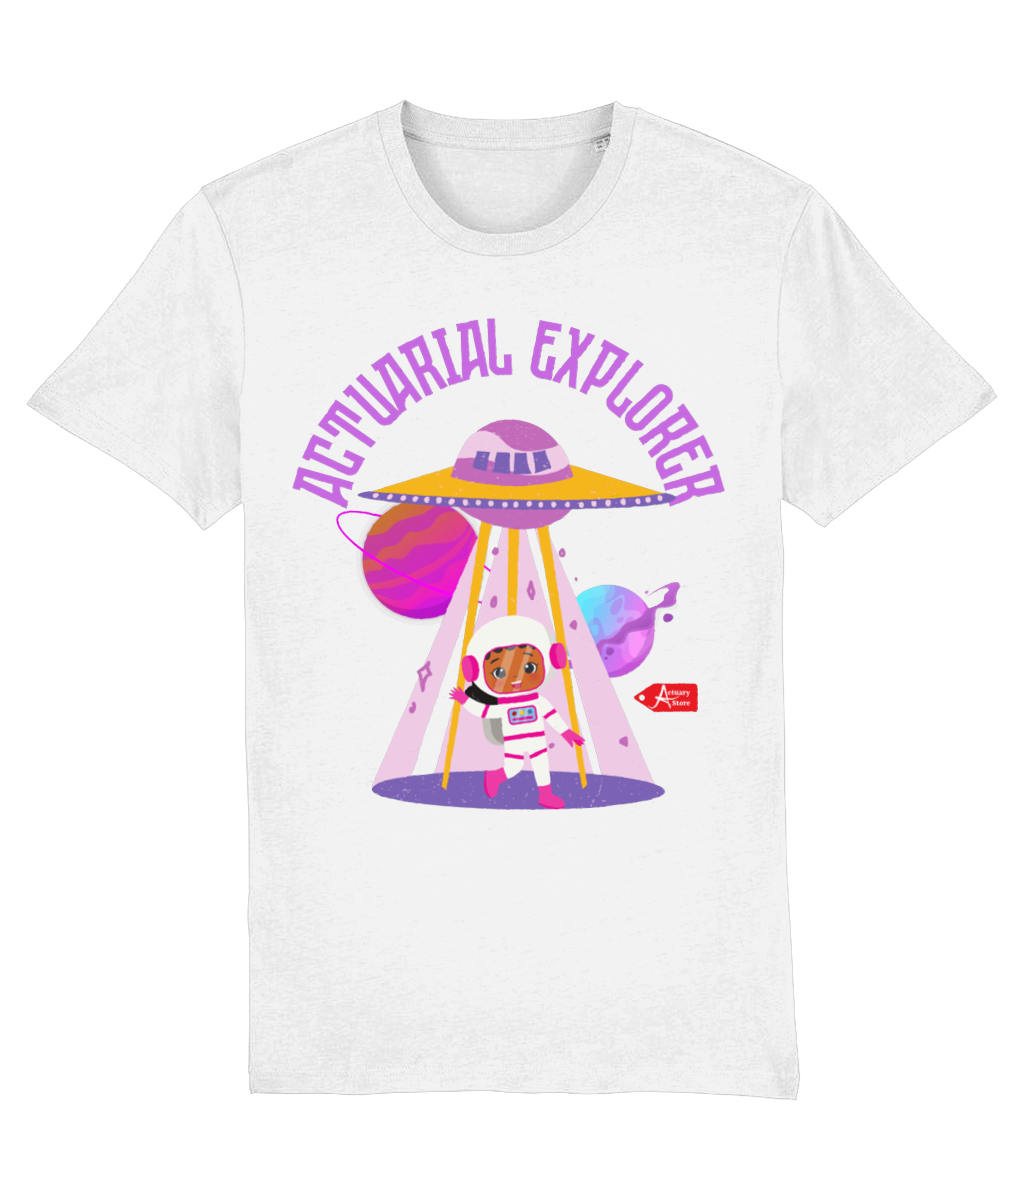 Actuarial Explorer Astronaut T-Shirt (Black and White Variants)